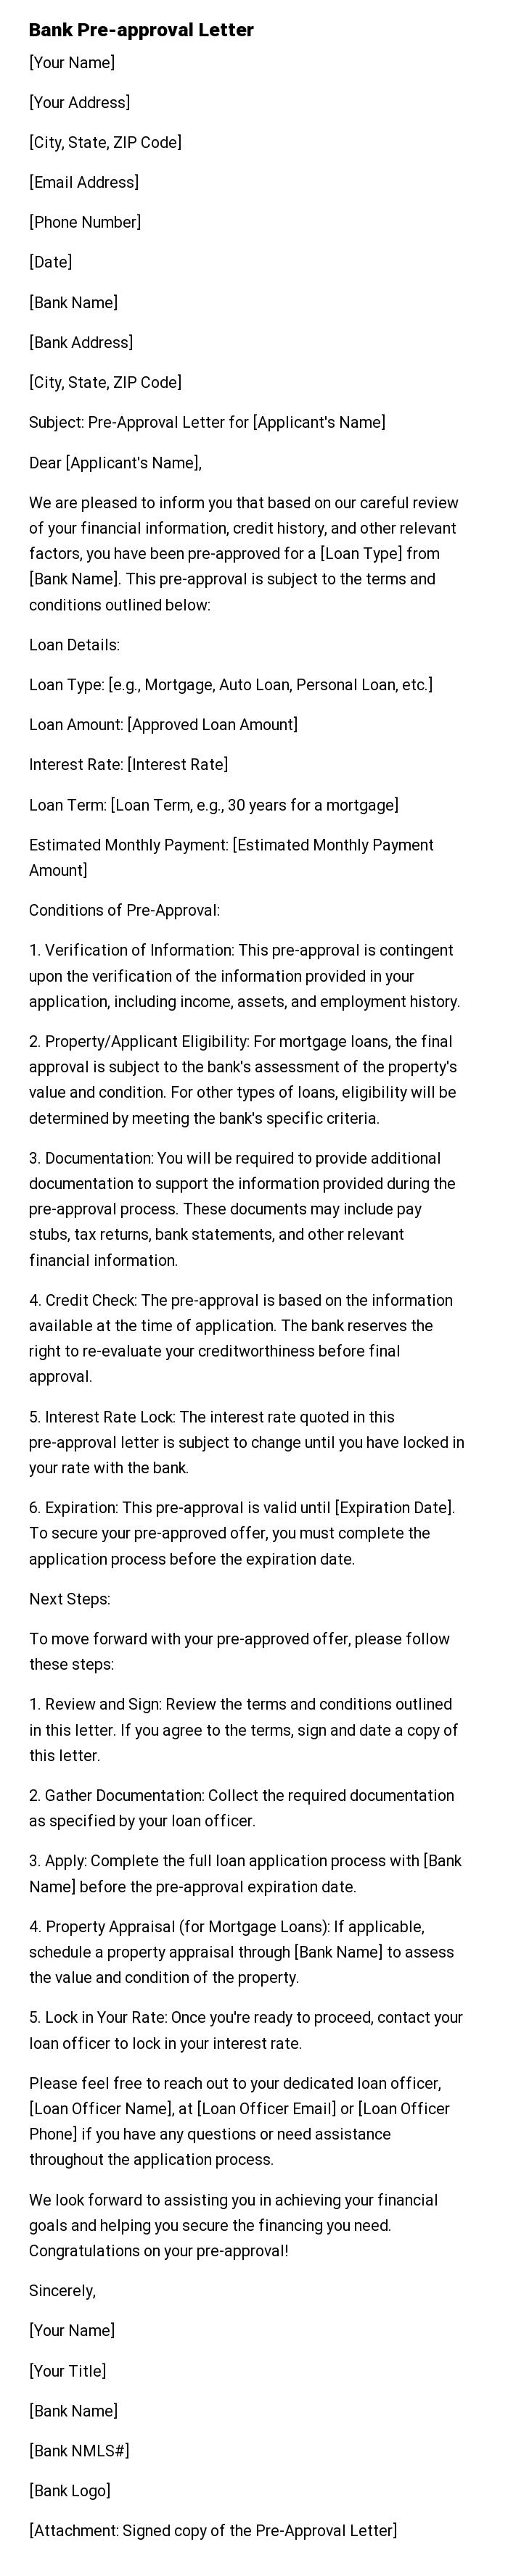 Bank Pre-approval Letter